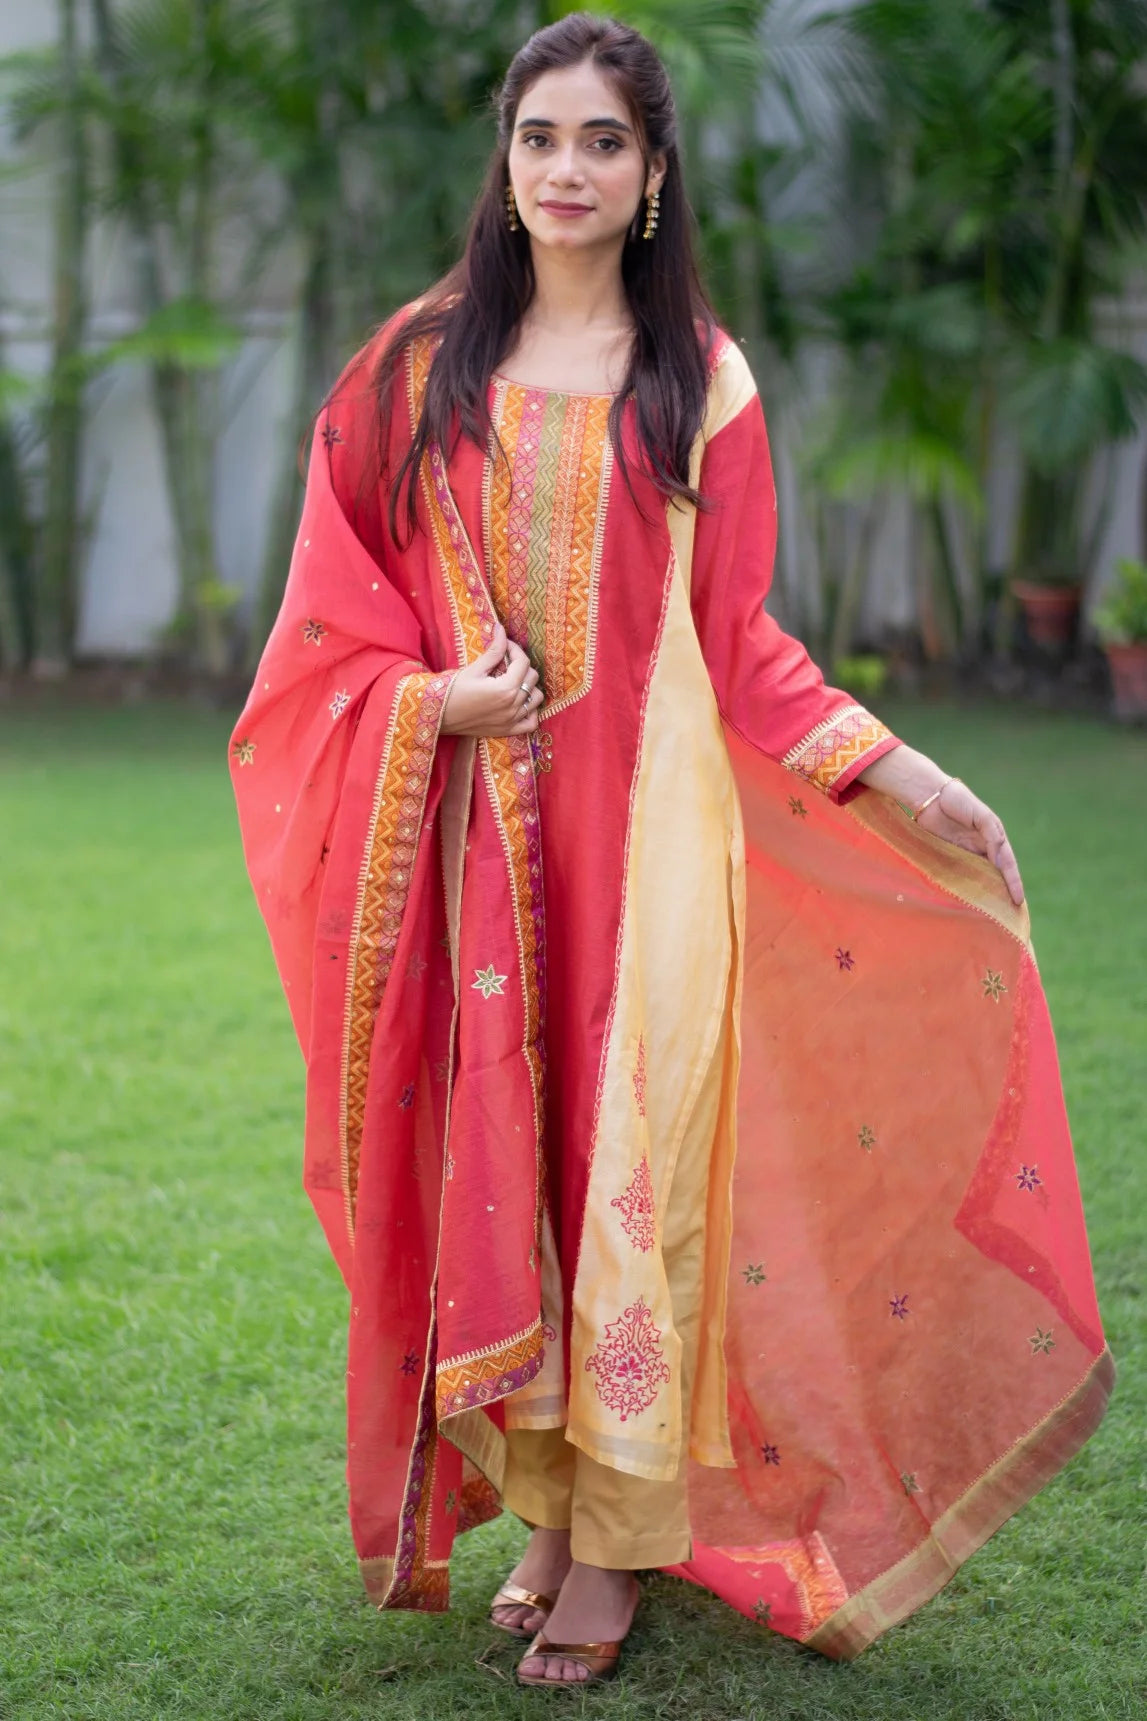 Indian women wearing zardozi suit